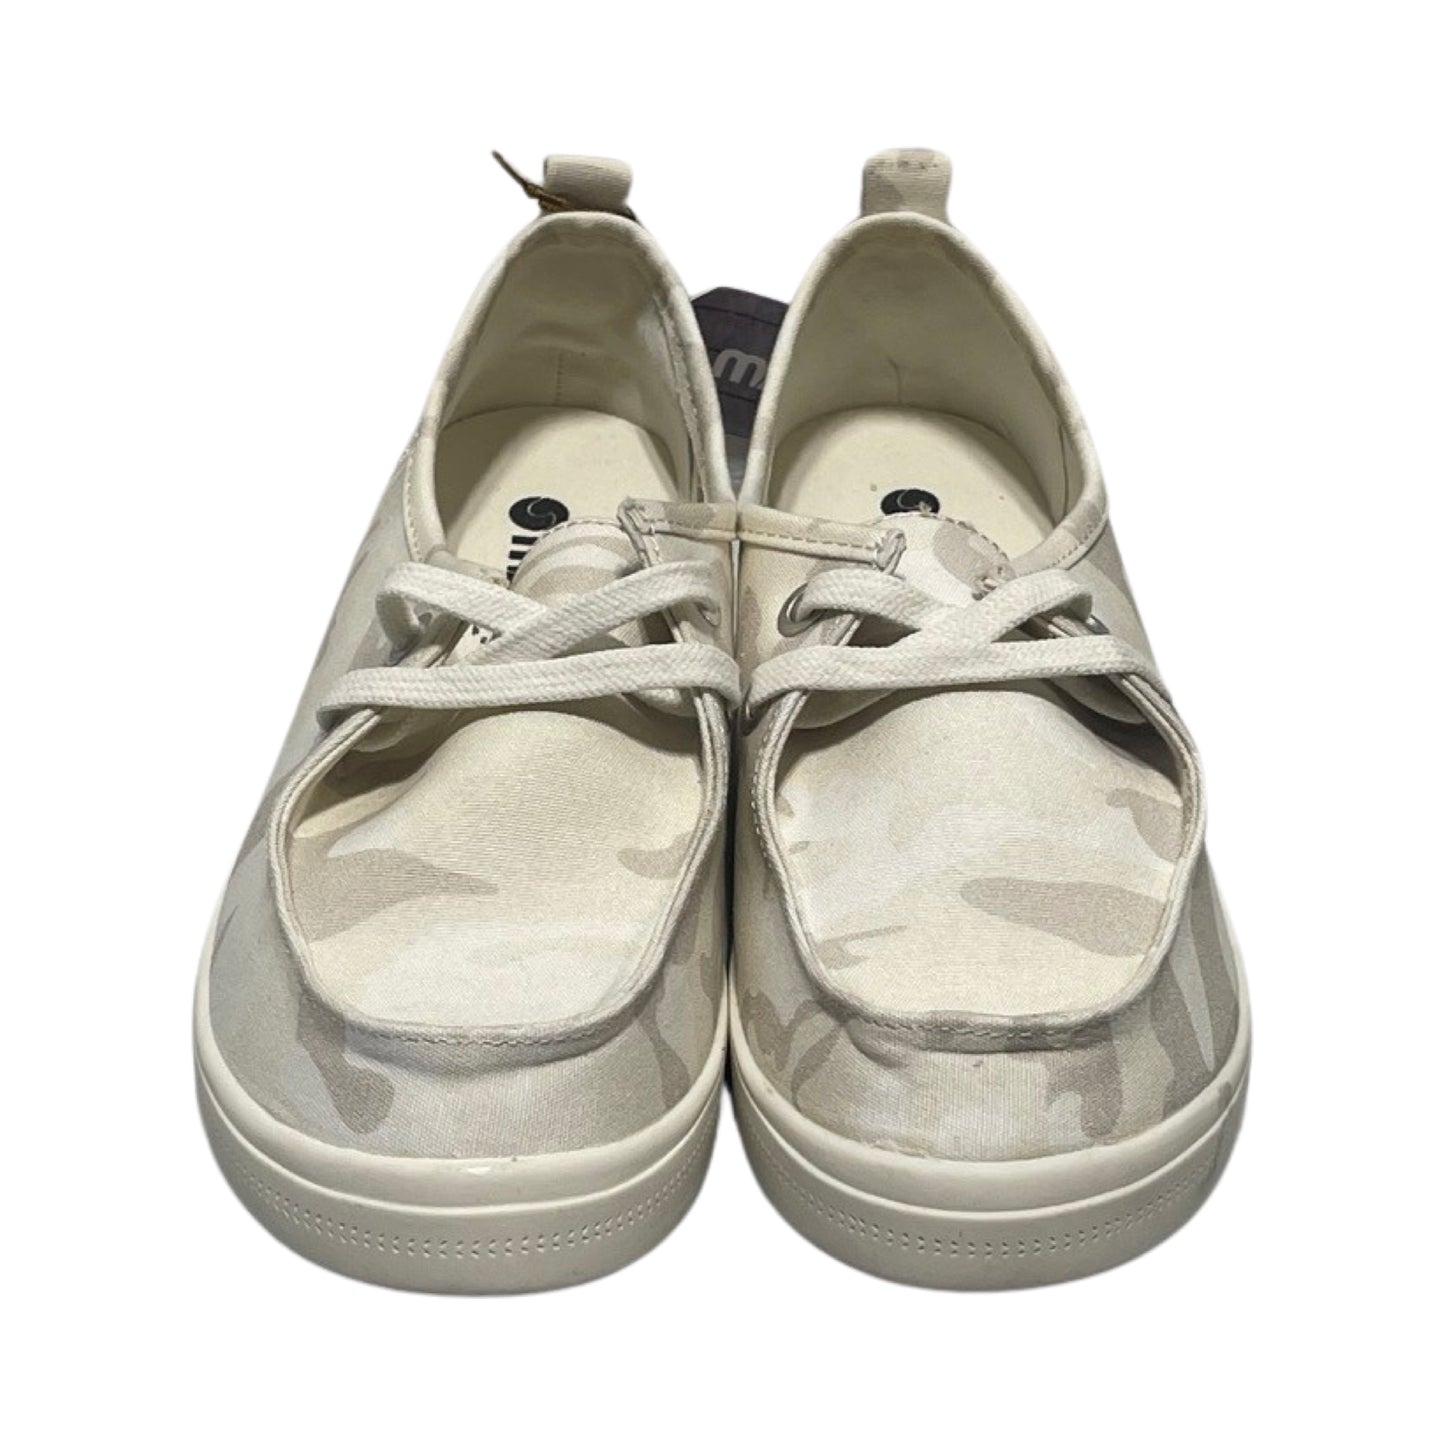 Shoes Flats By Makula  Size: 7.5